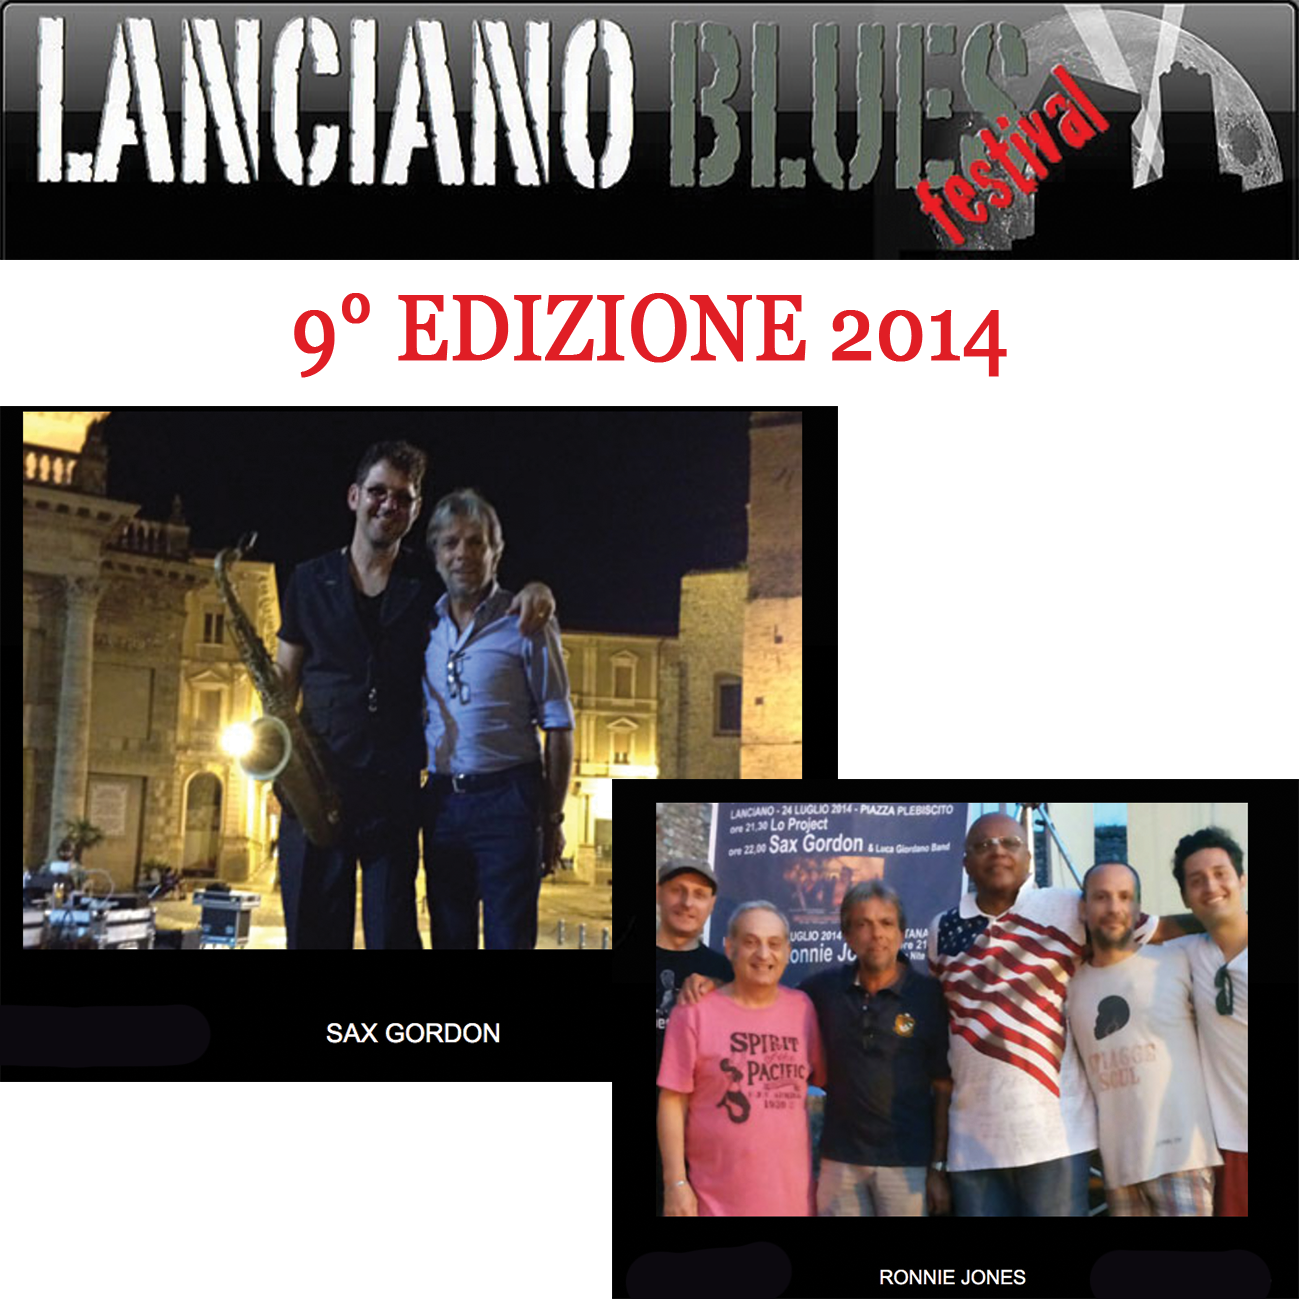 LANCIANO BLUES FESTIVAL 2014